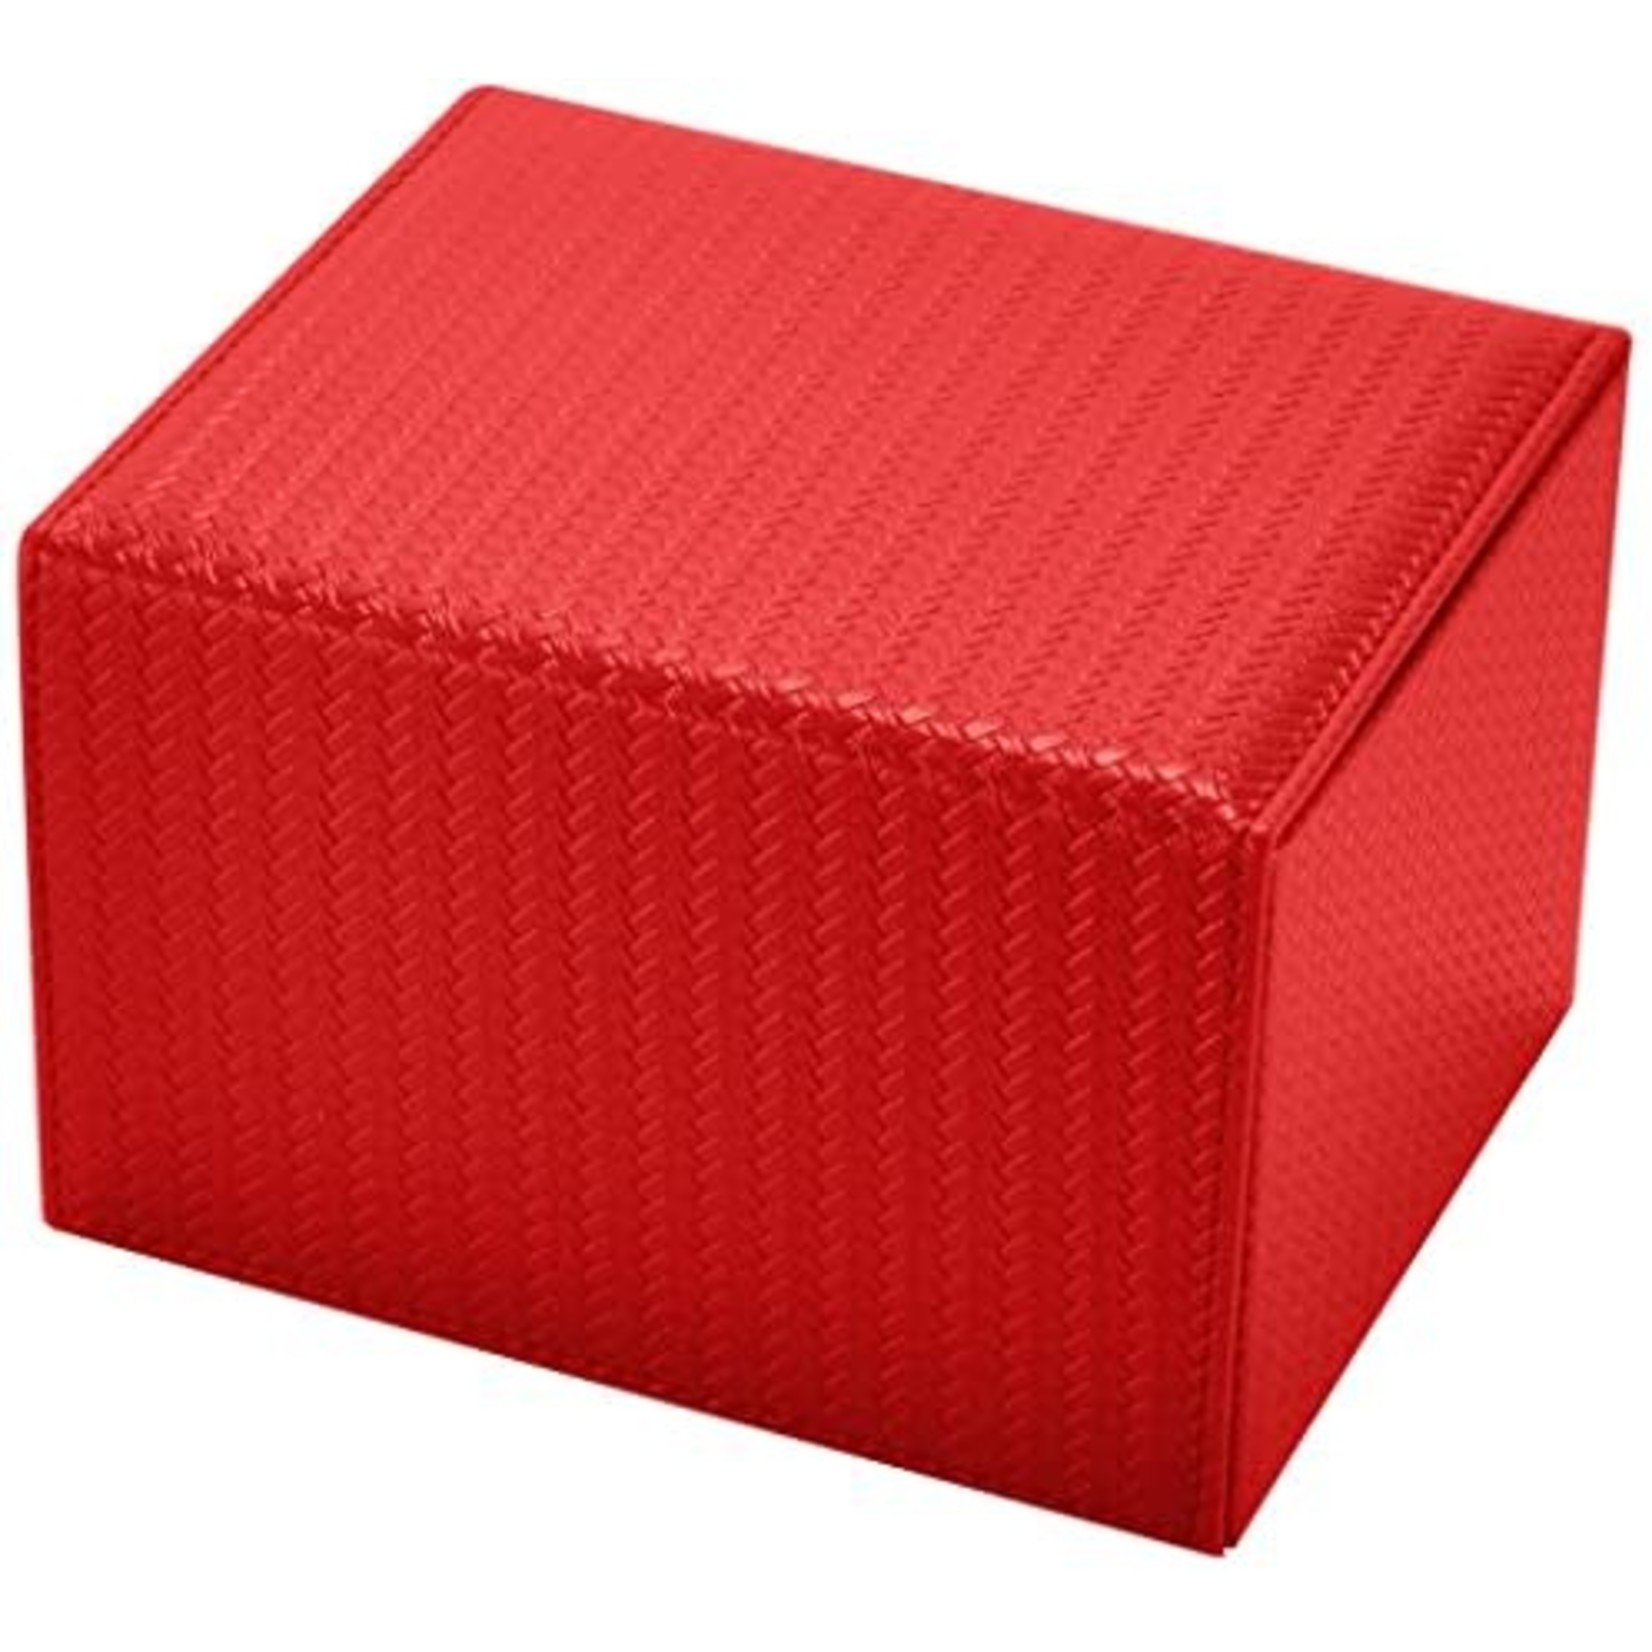 Deck Box Proline Large Red